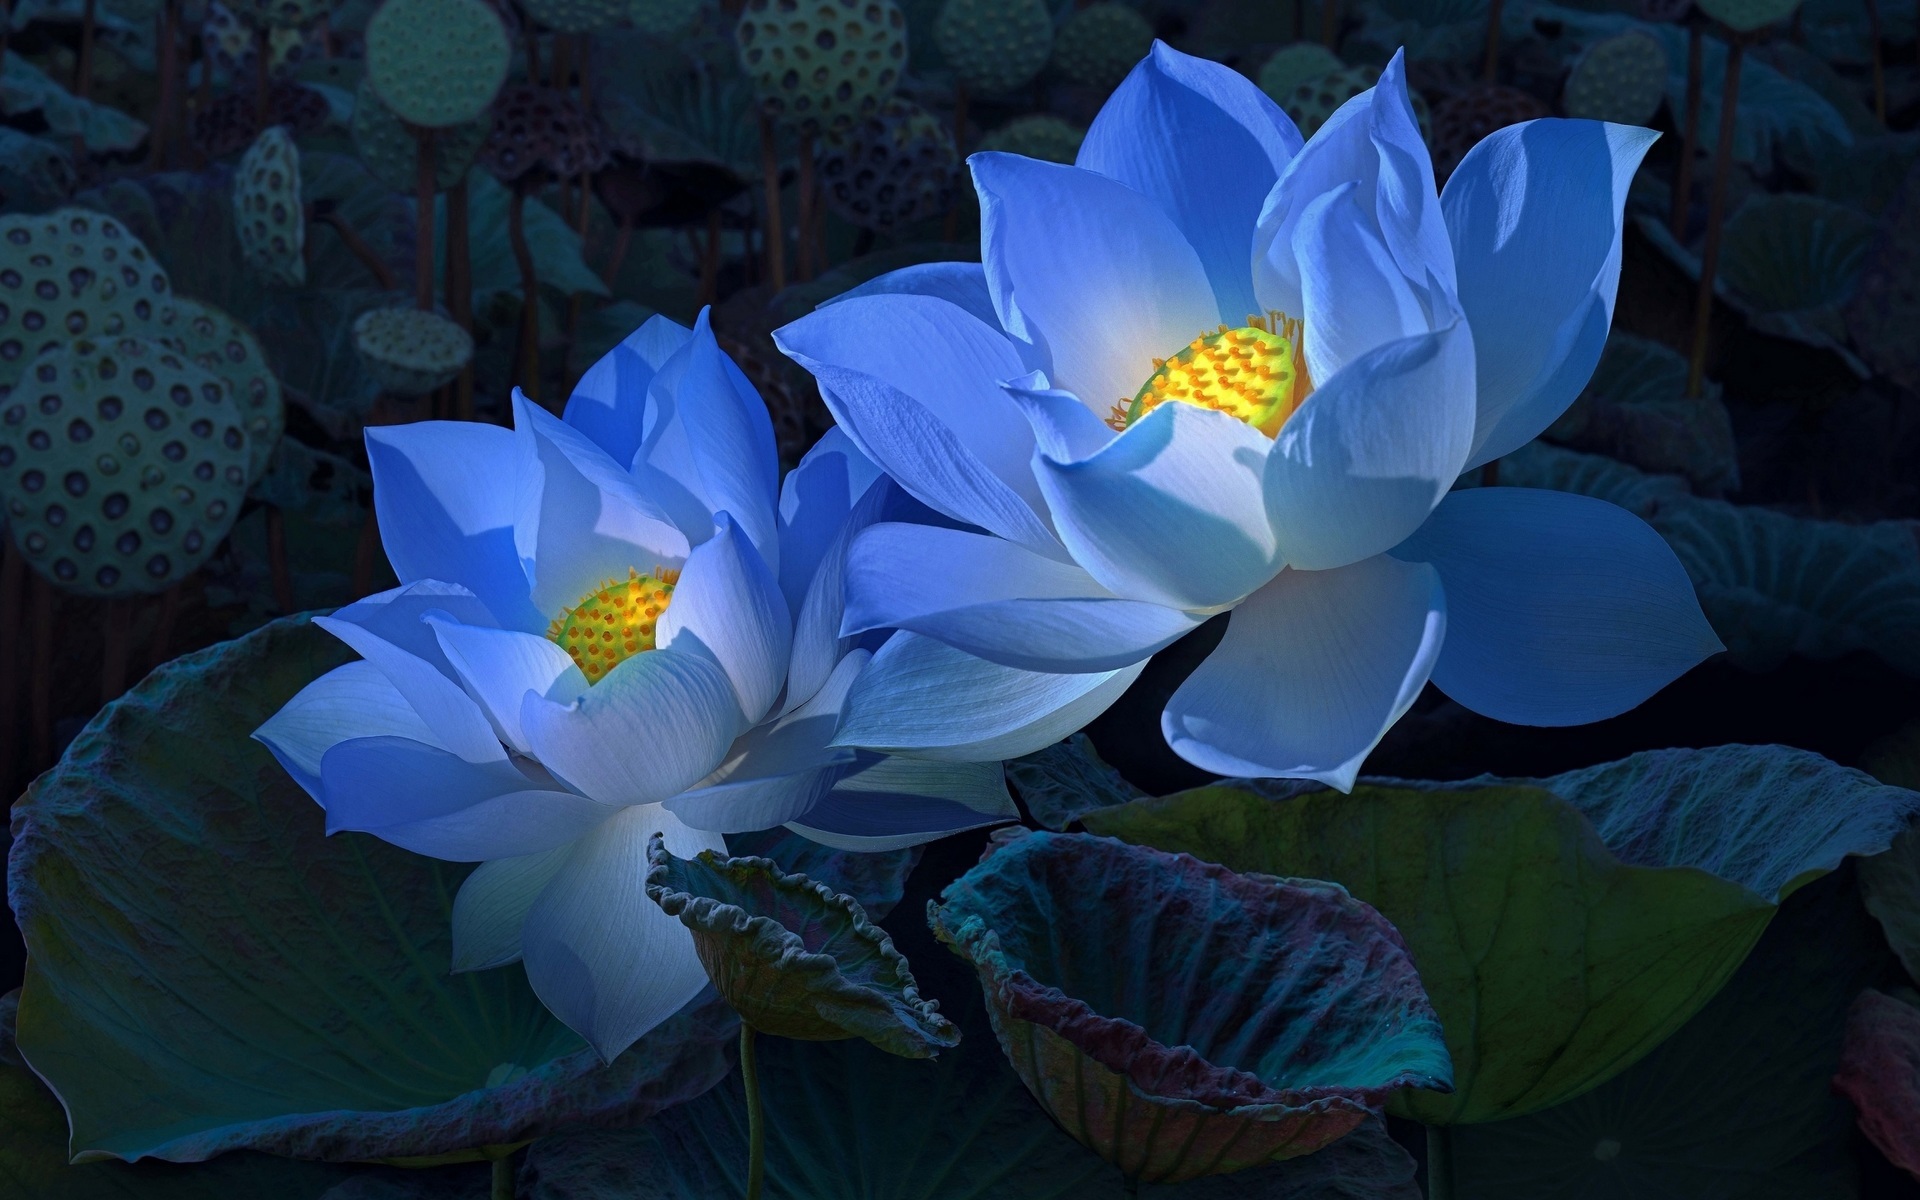 Top 99+ Hình nền Hoa Sen đẹp Full HD, 4K, chất ngầu nhất 47 | Lotus flower  pictures, Lotus flower art, Flower painting